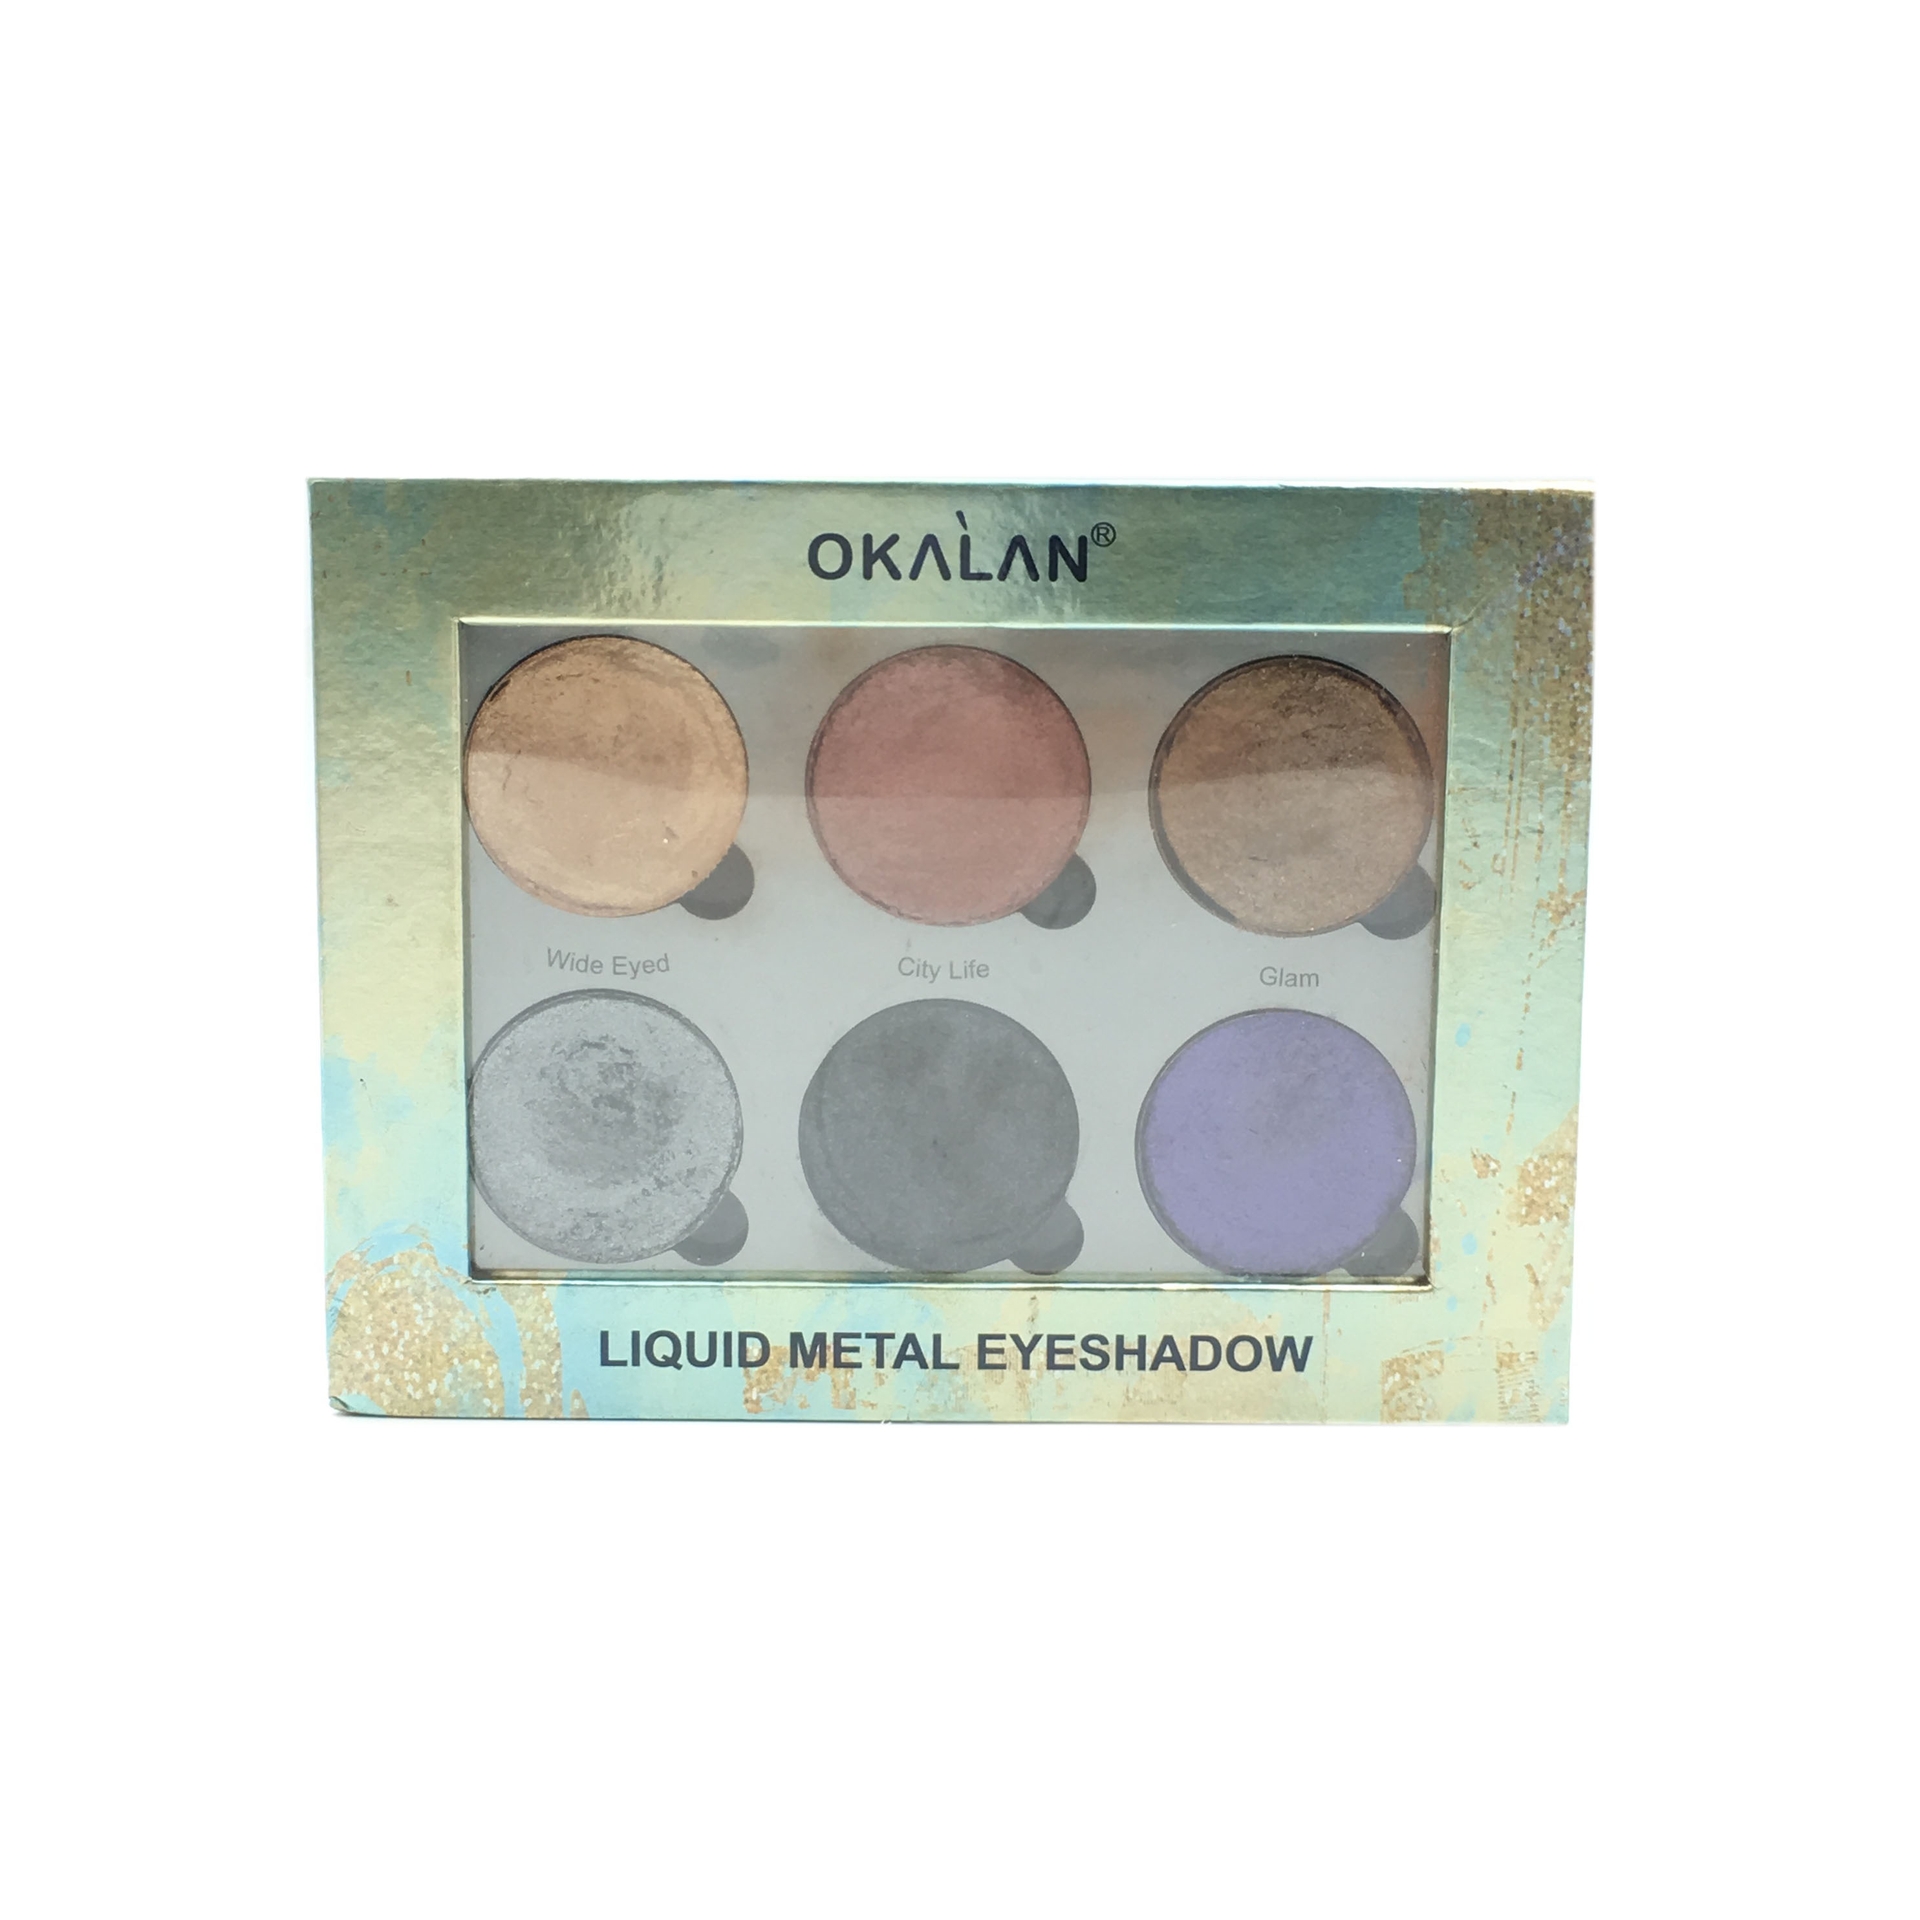 Okalan Liquid Metal Eyeshadow Sets and Palette